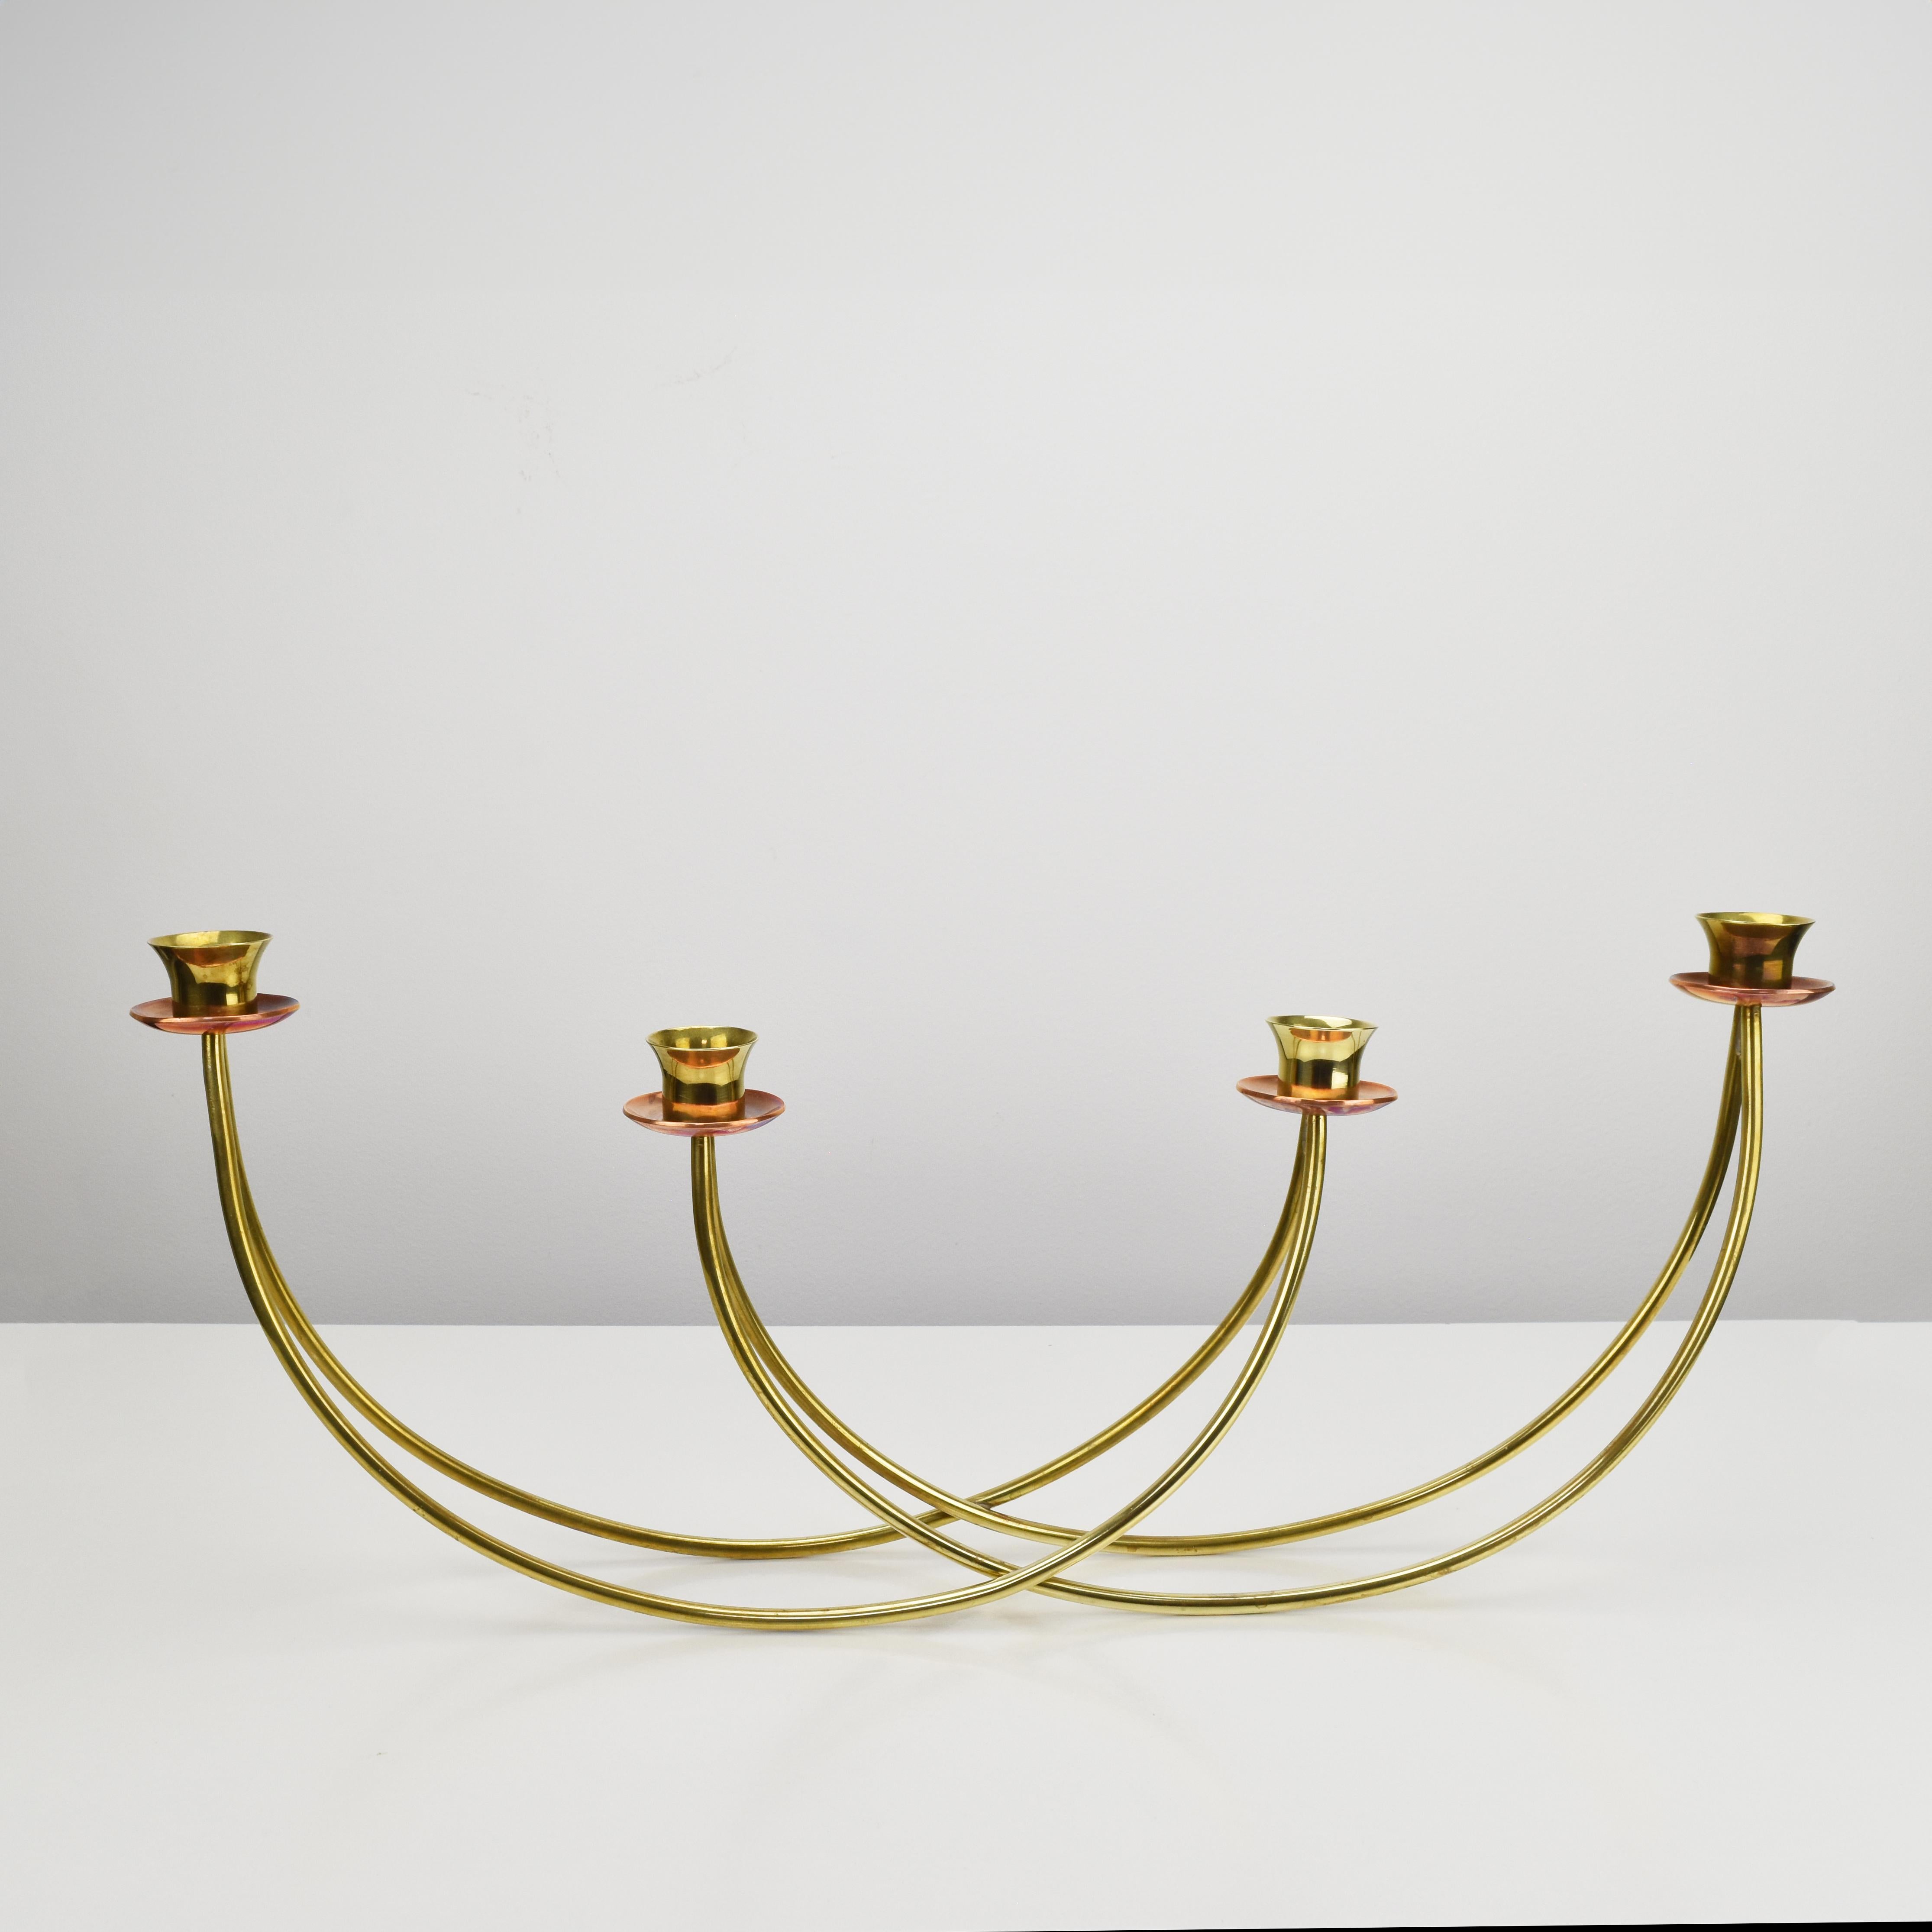 Hand-Crafted Sculptural Brass & Copper Candleholder by Harald Buchrucker Bauhaus 1940s For Sale